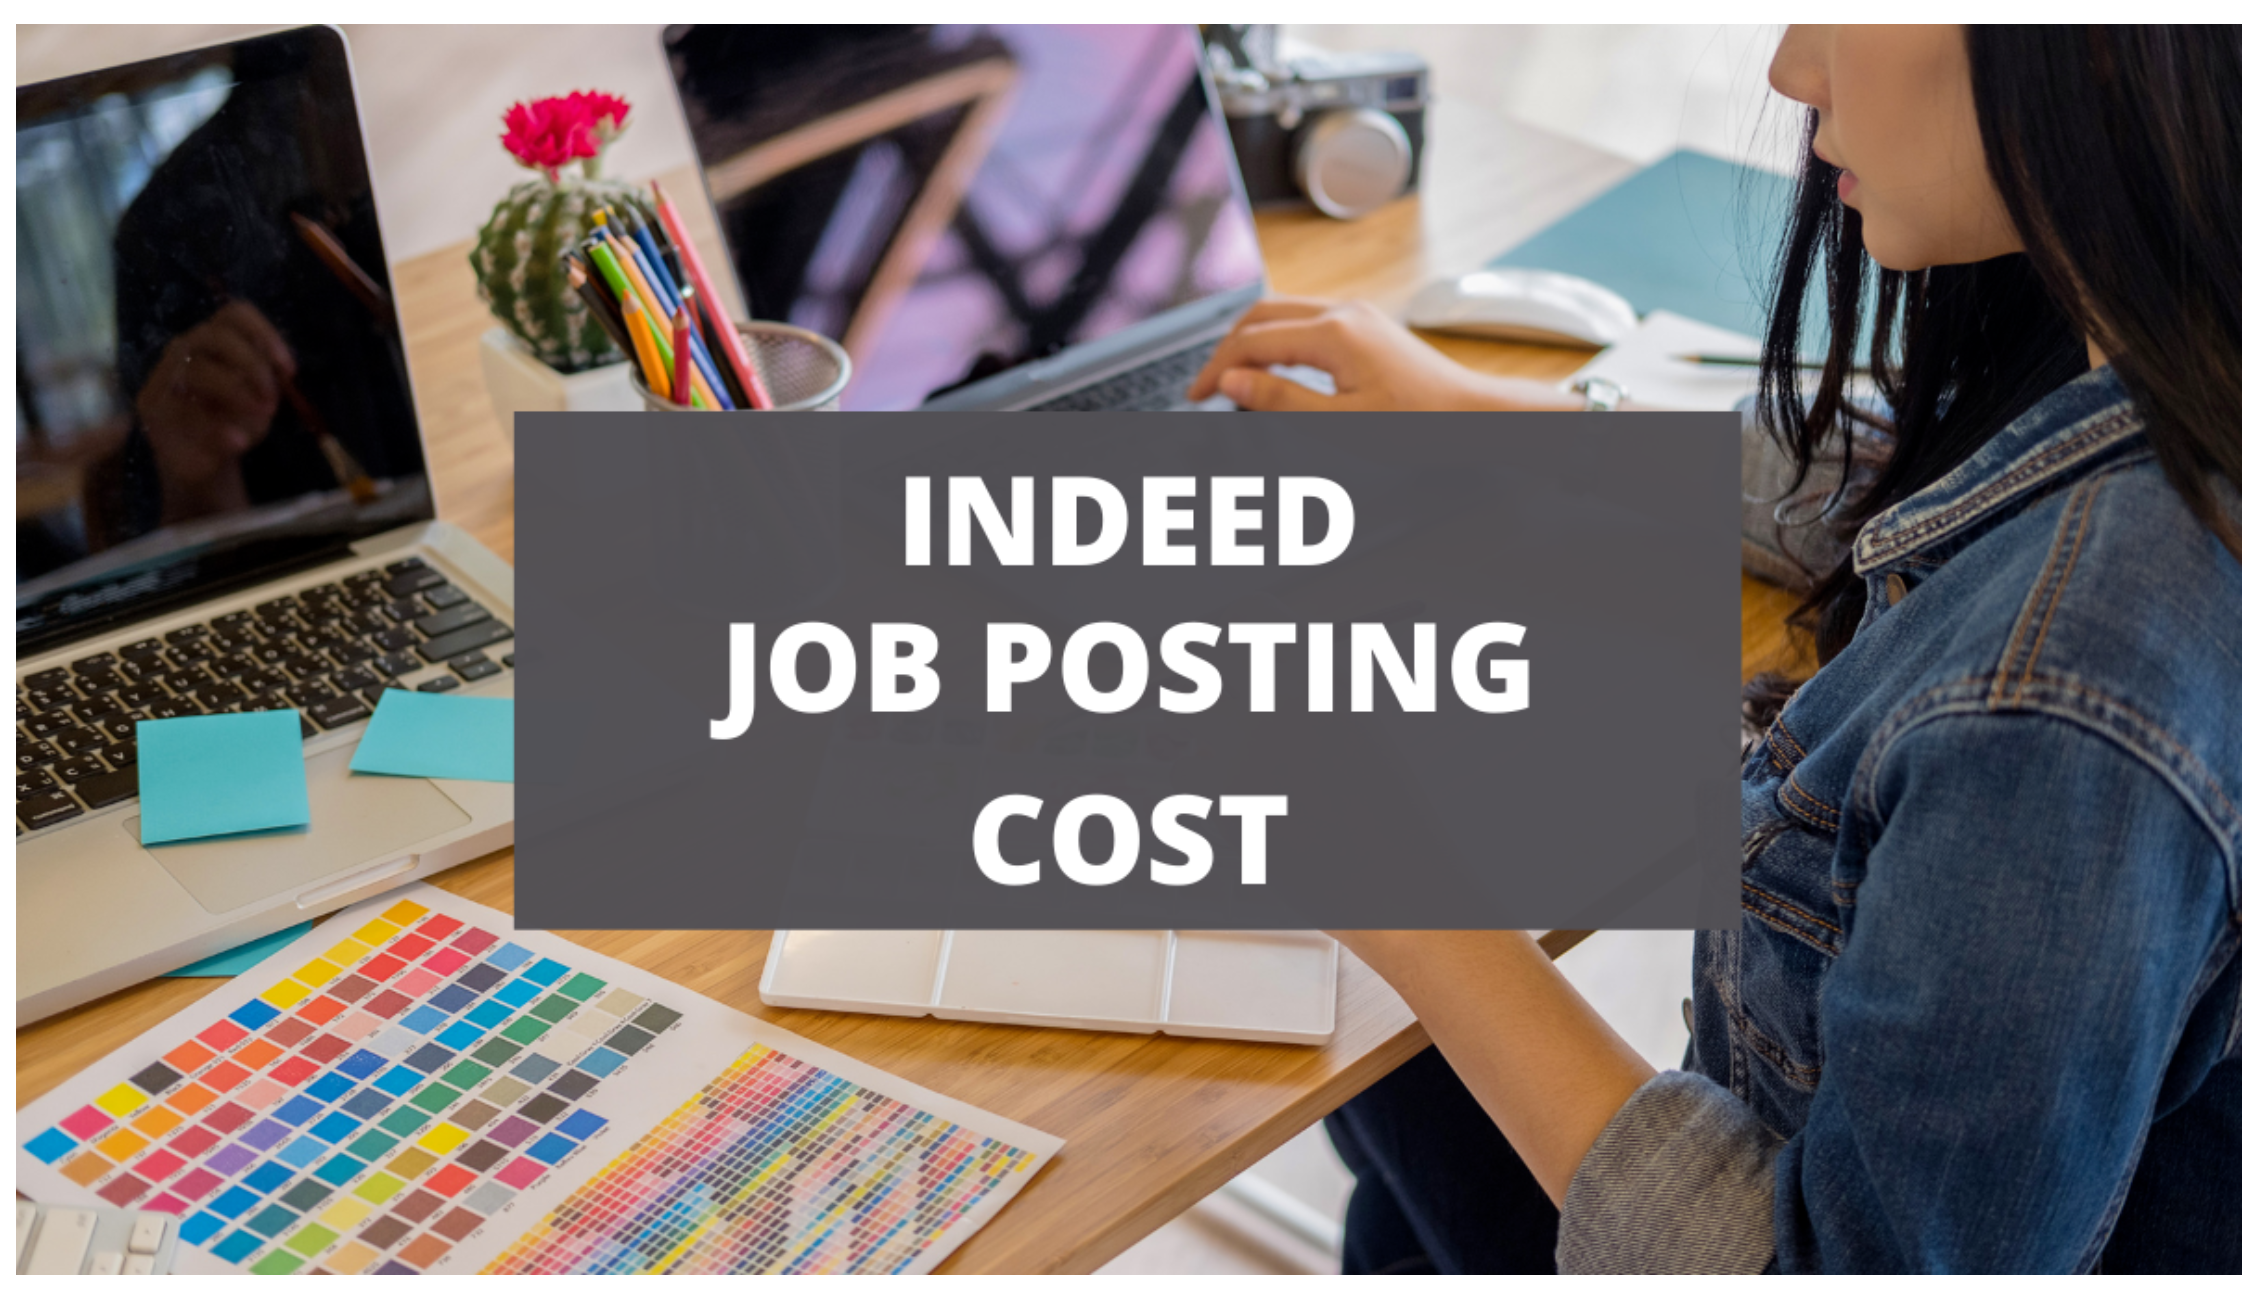 Indeed Job Posting - Job Posting on Indeed - The Cost of Indeed Job Posting